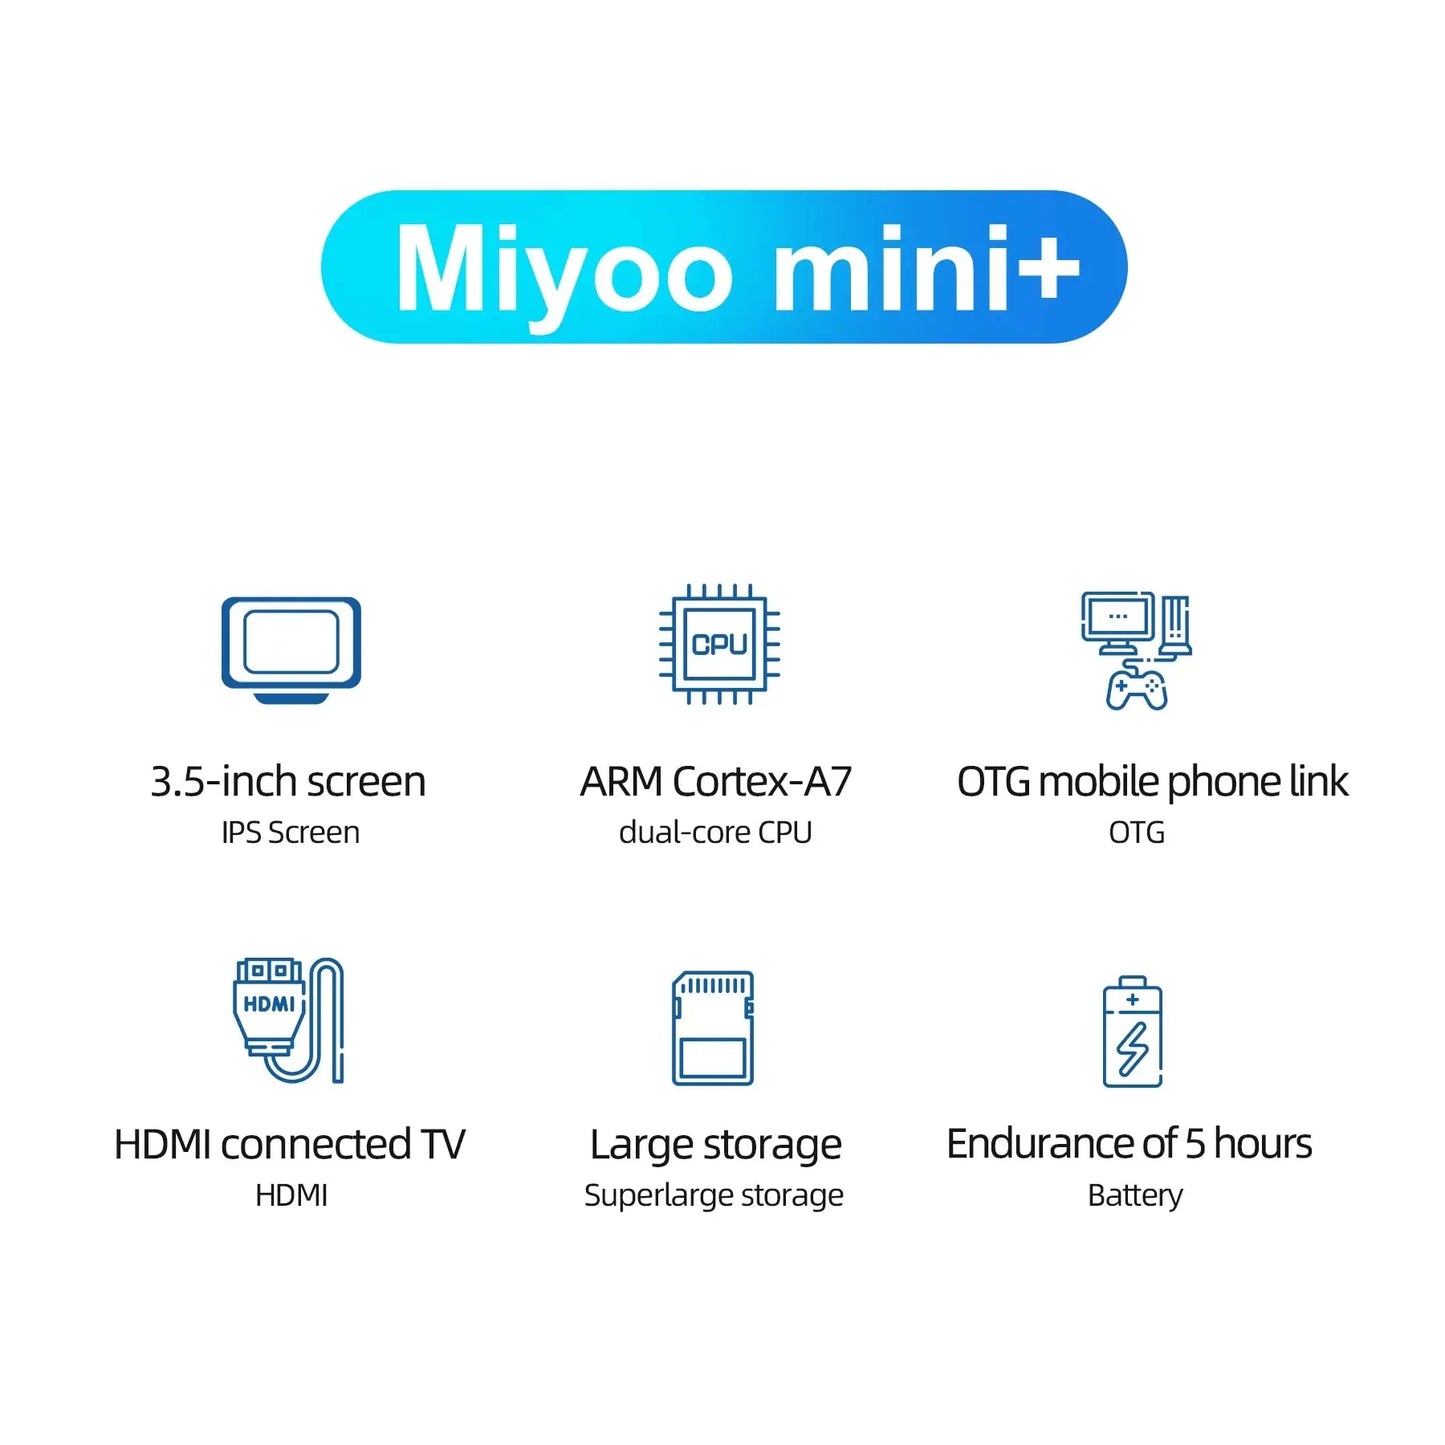 MIYOO Retro Arcade Explorer - V2 Mini+